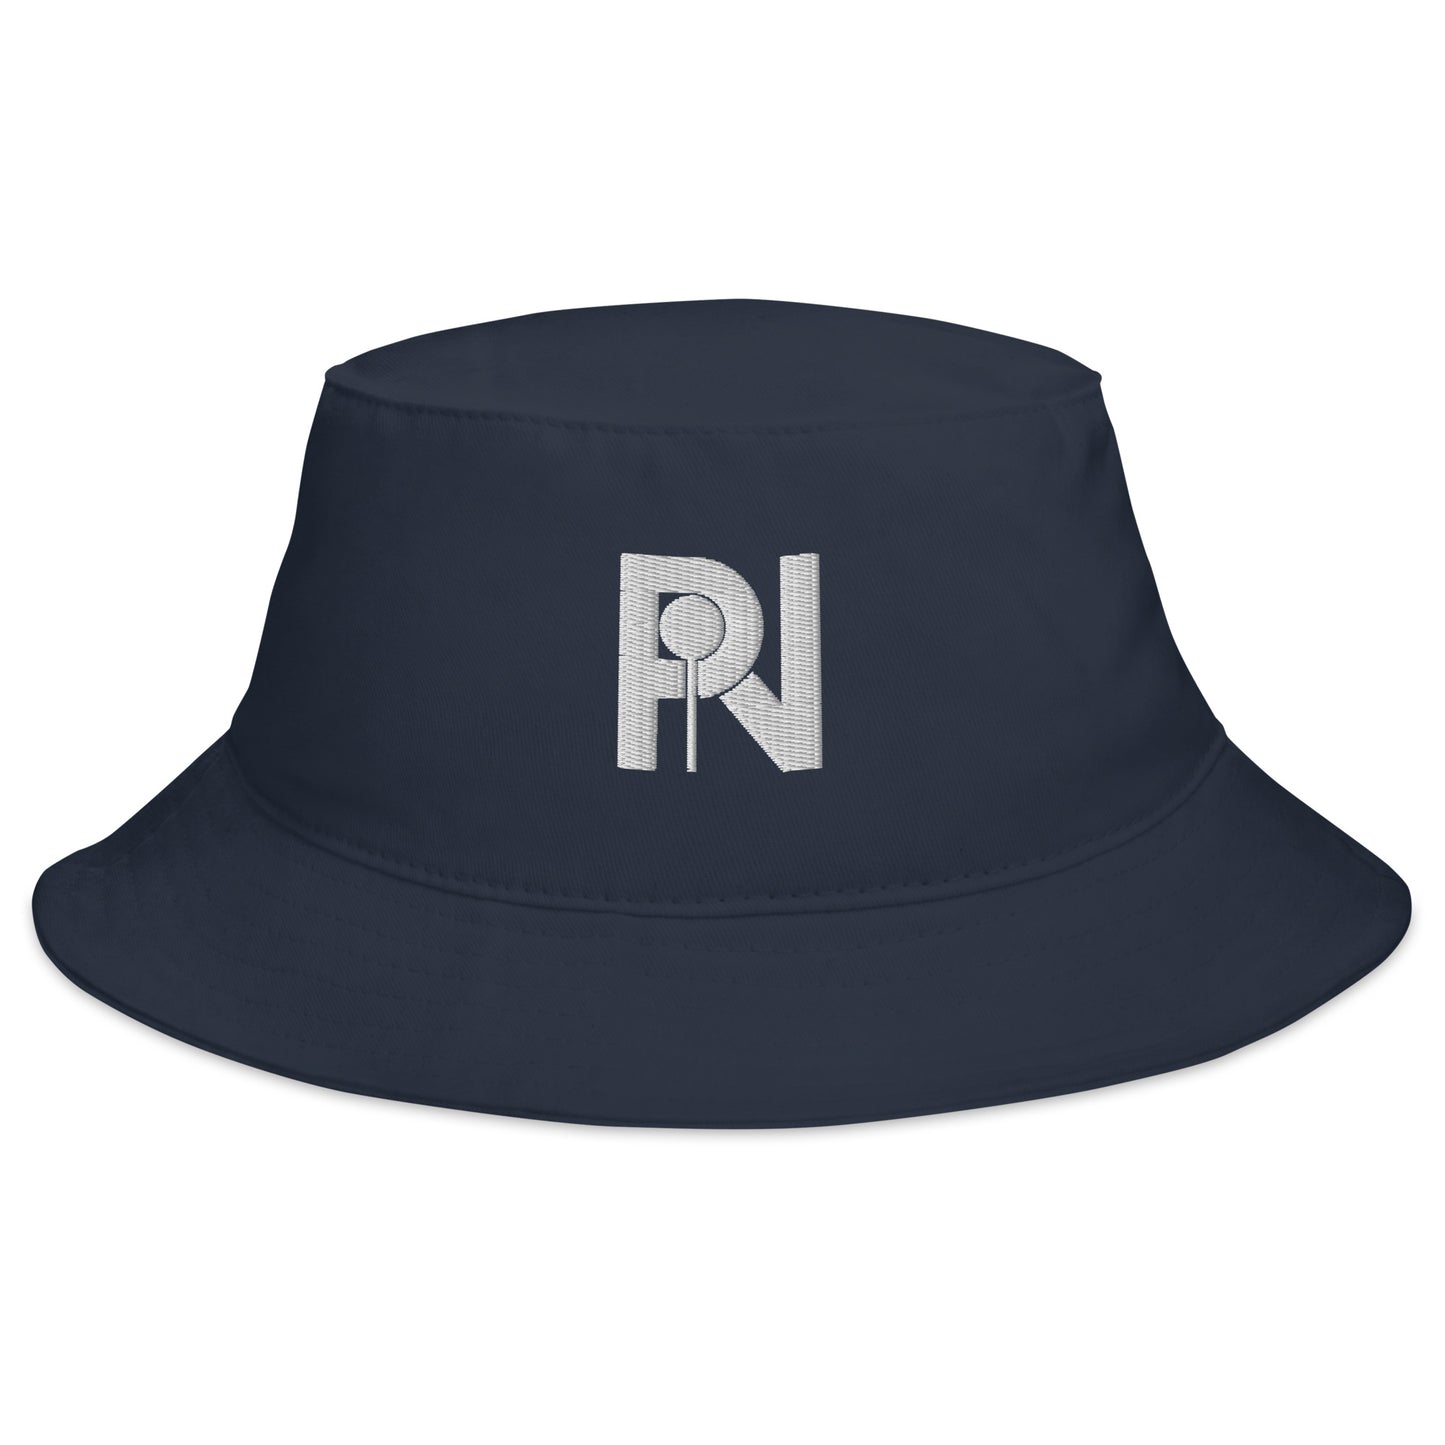 Unisex simple logo bucket hat